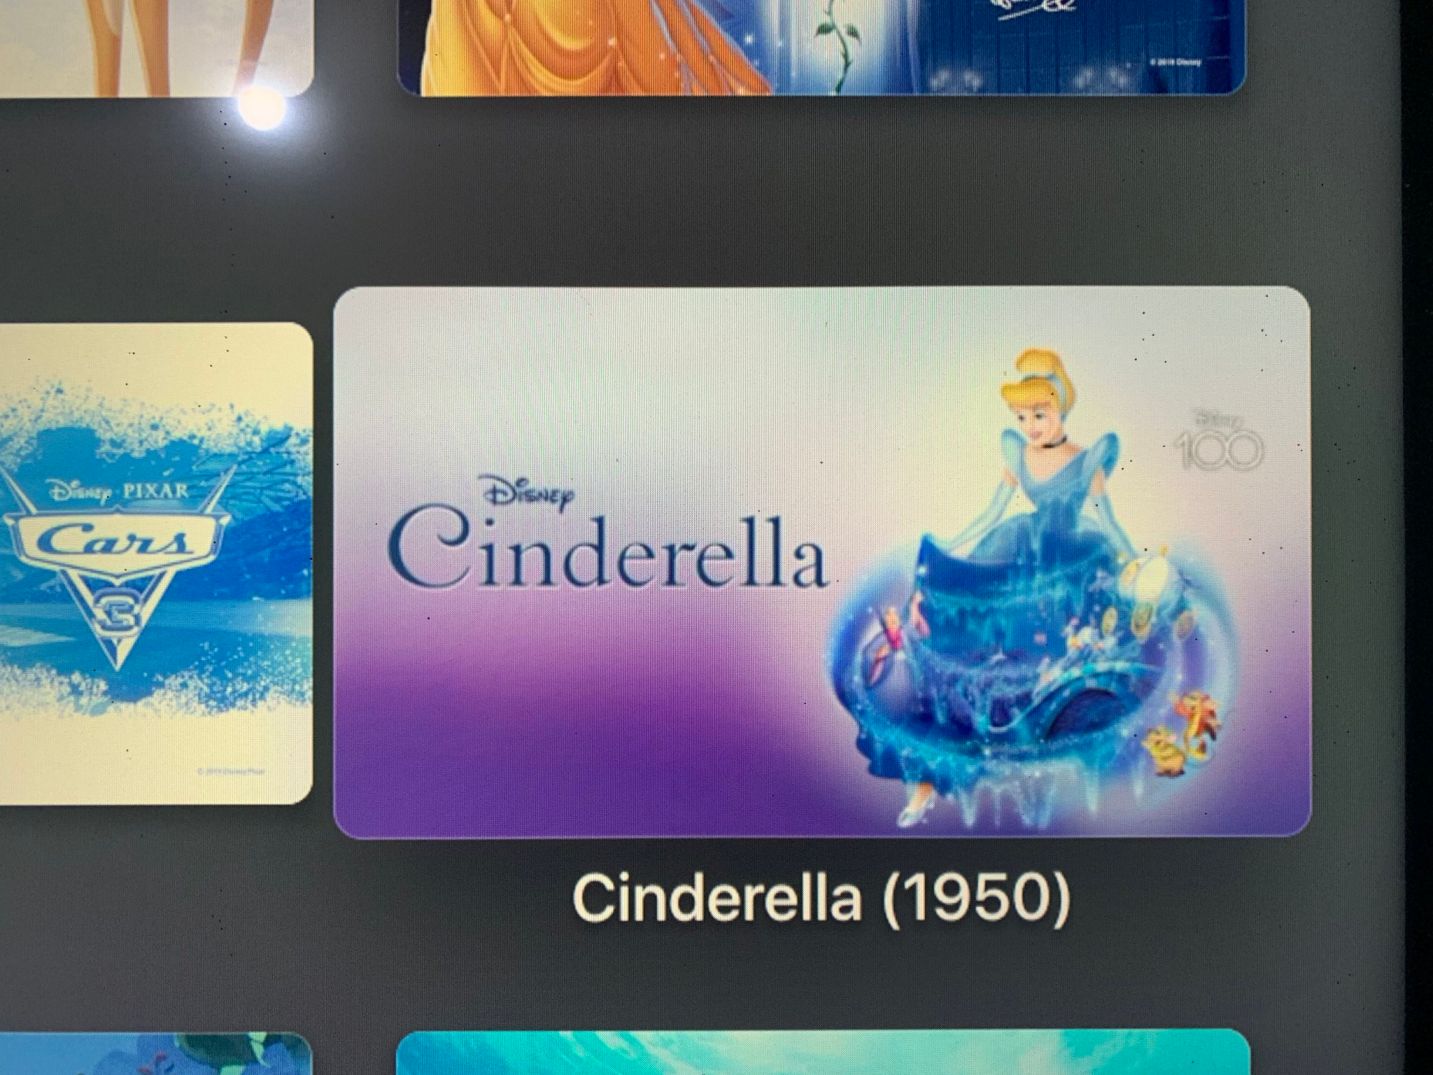 Cinderella cover